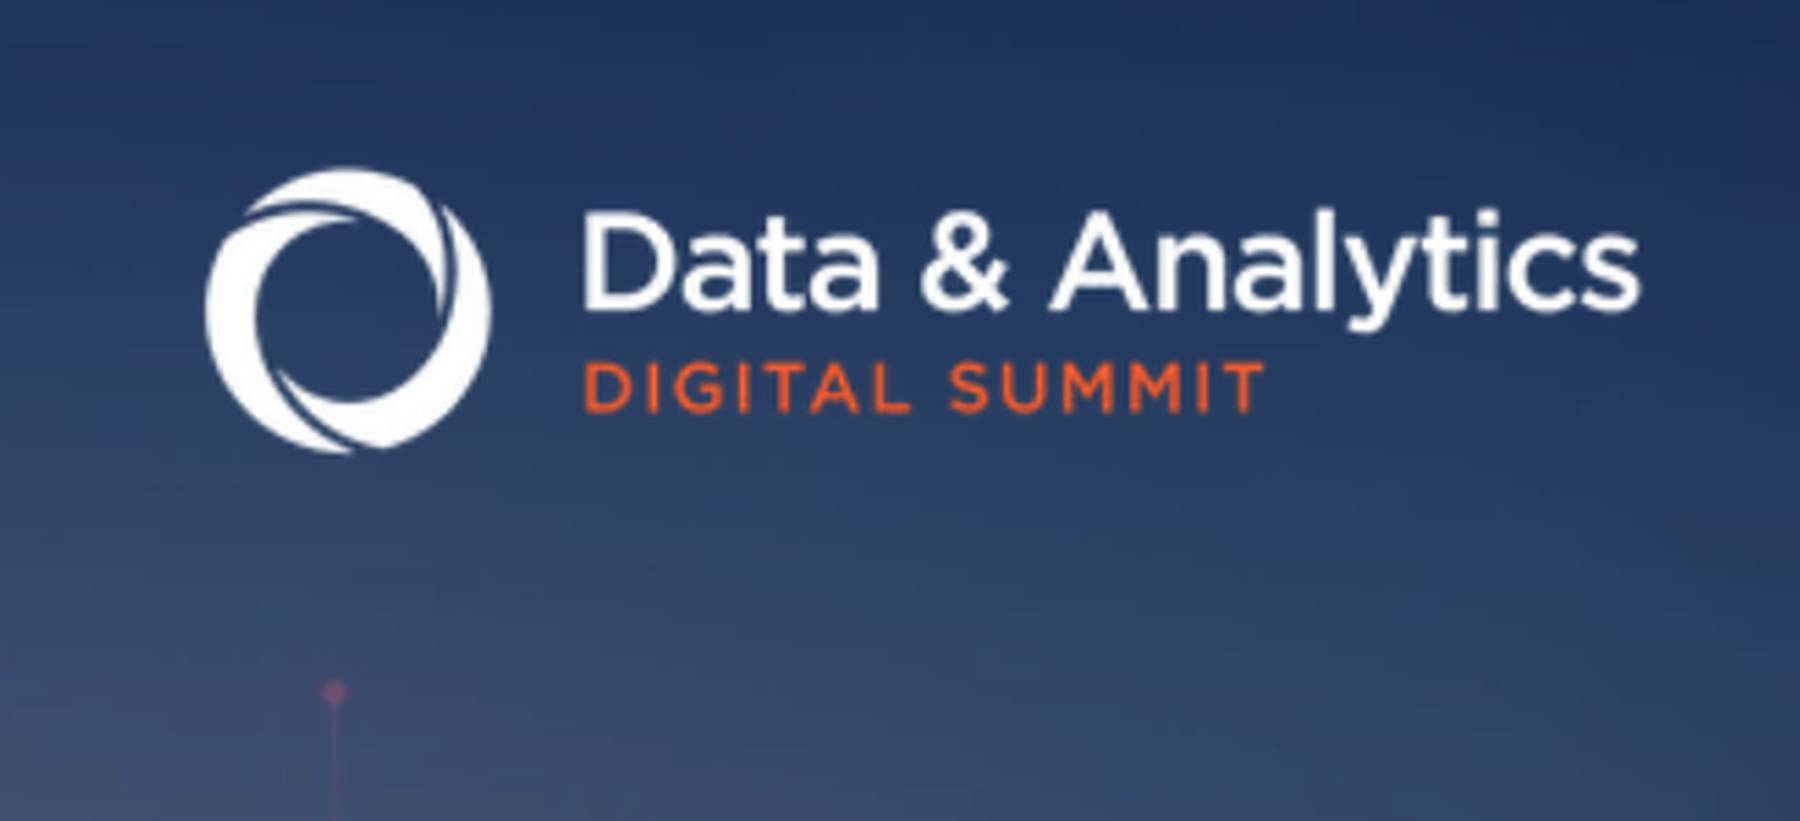 Data & Analytics Digital Summit 2020